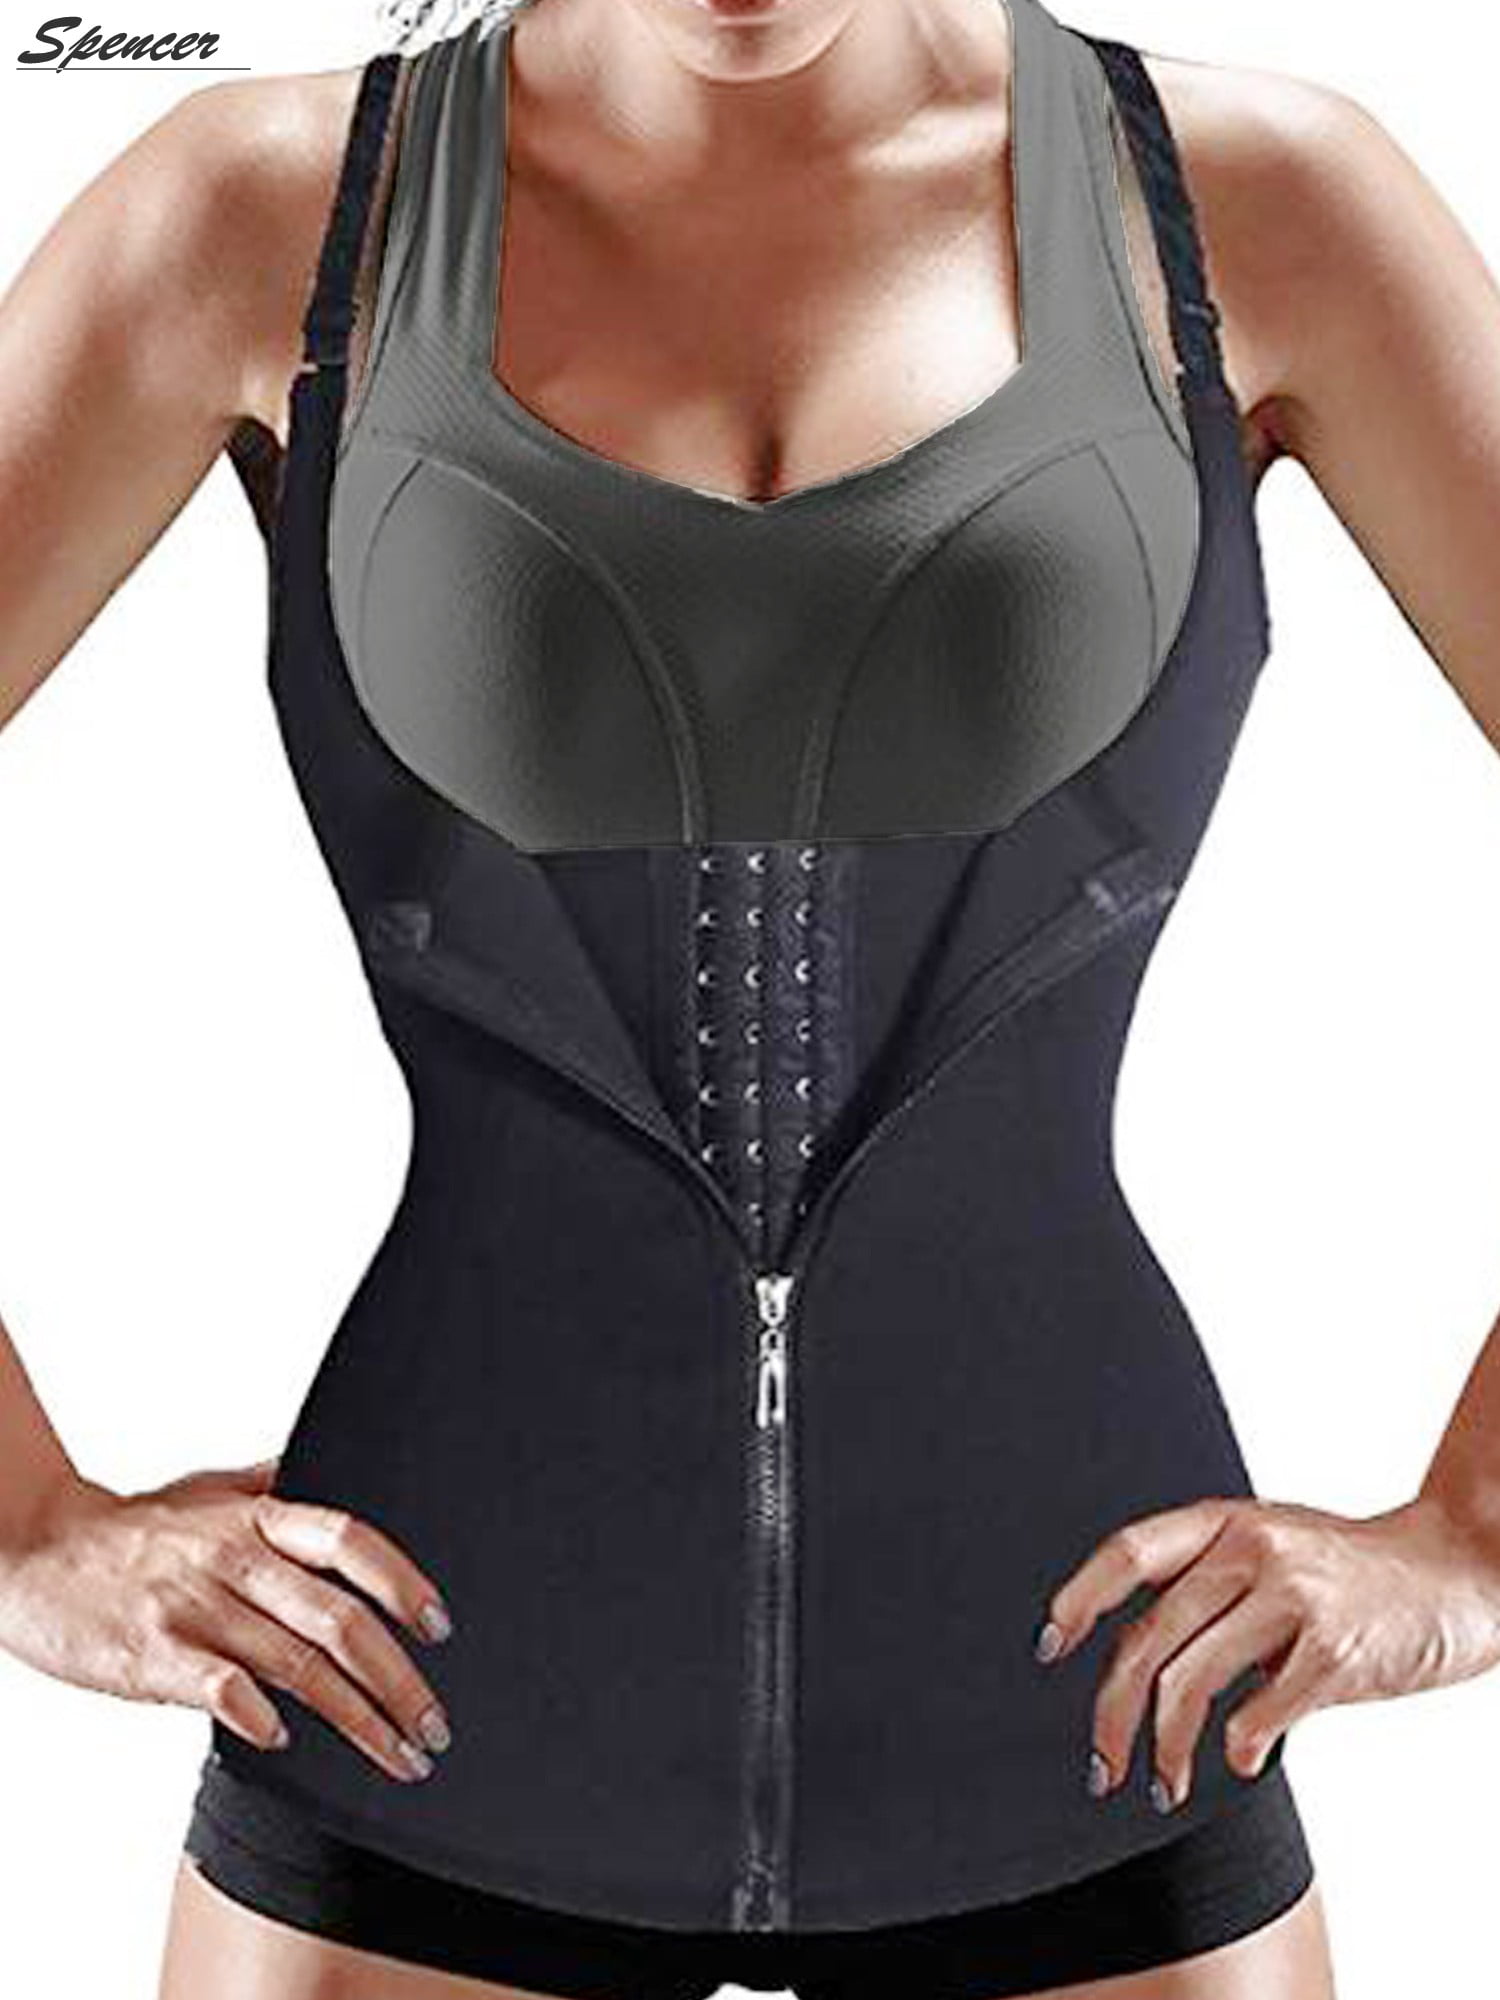 Hot Shapers Sauna Sweat Vest Waist Trainer Women Body Slimming Trimmer Corset,Black,XL